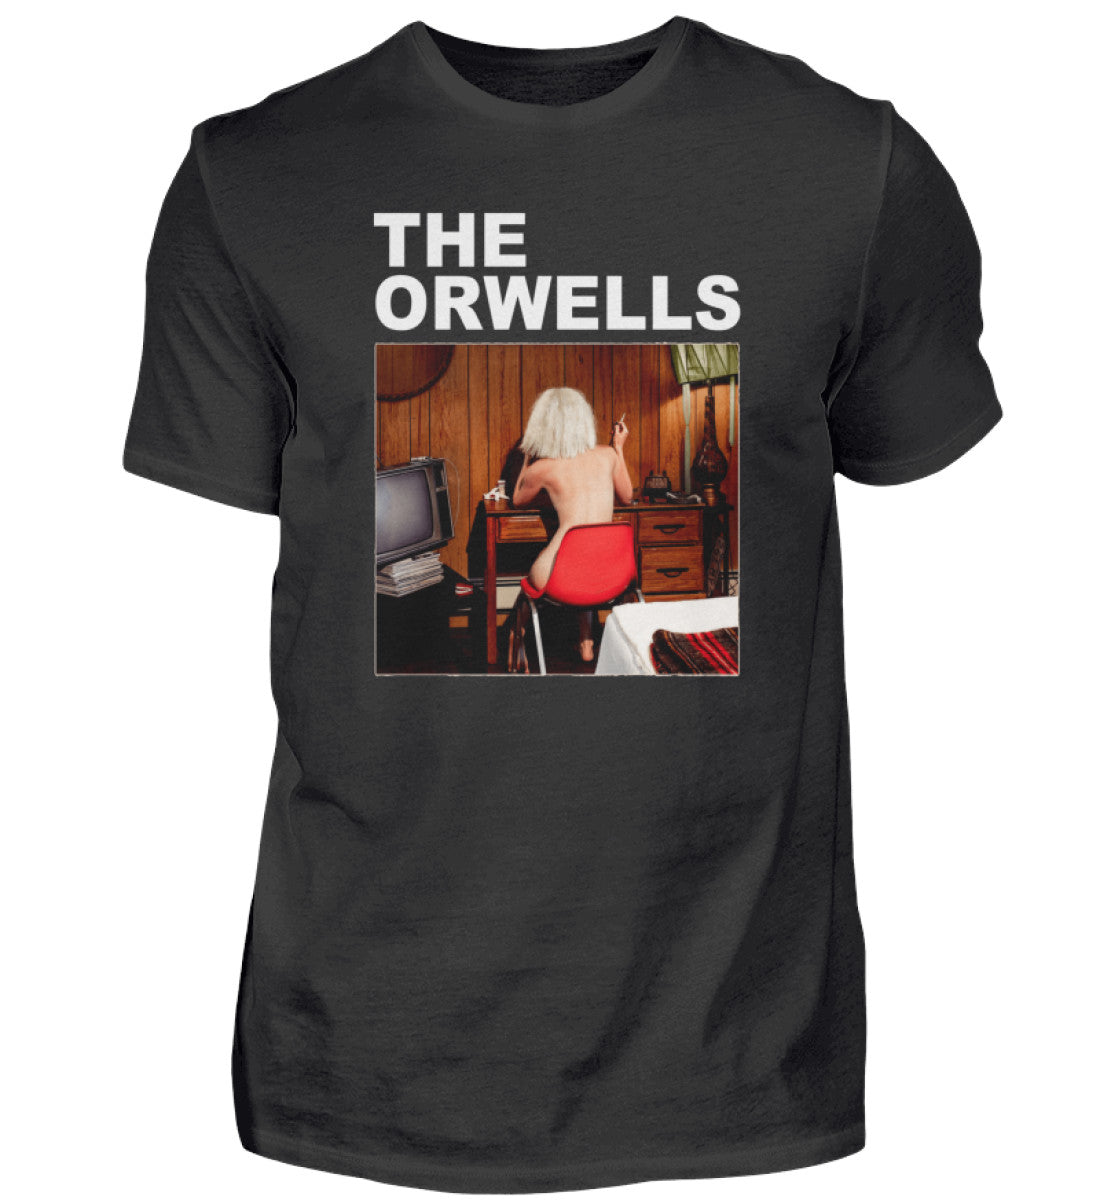 The Orwells T-Shirt Men